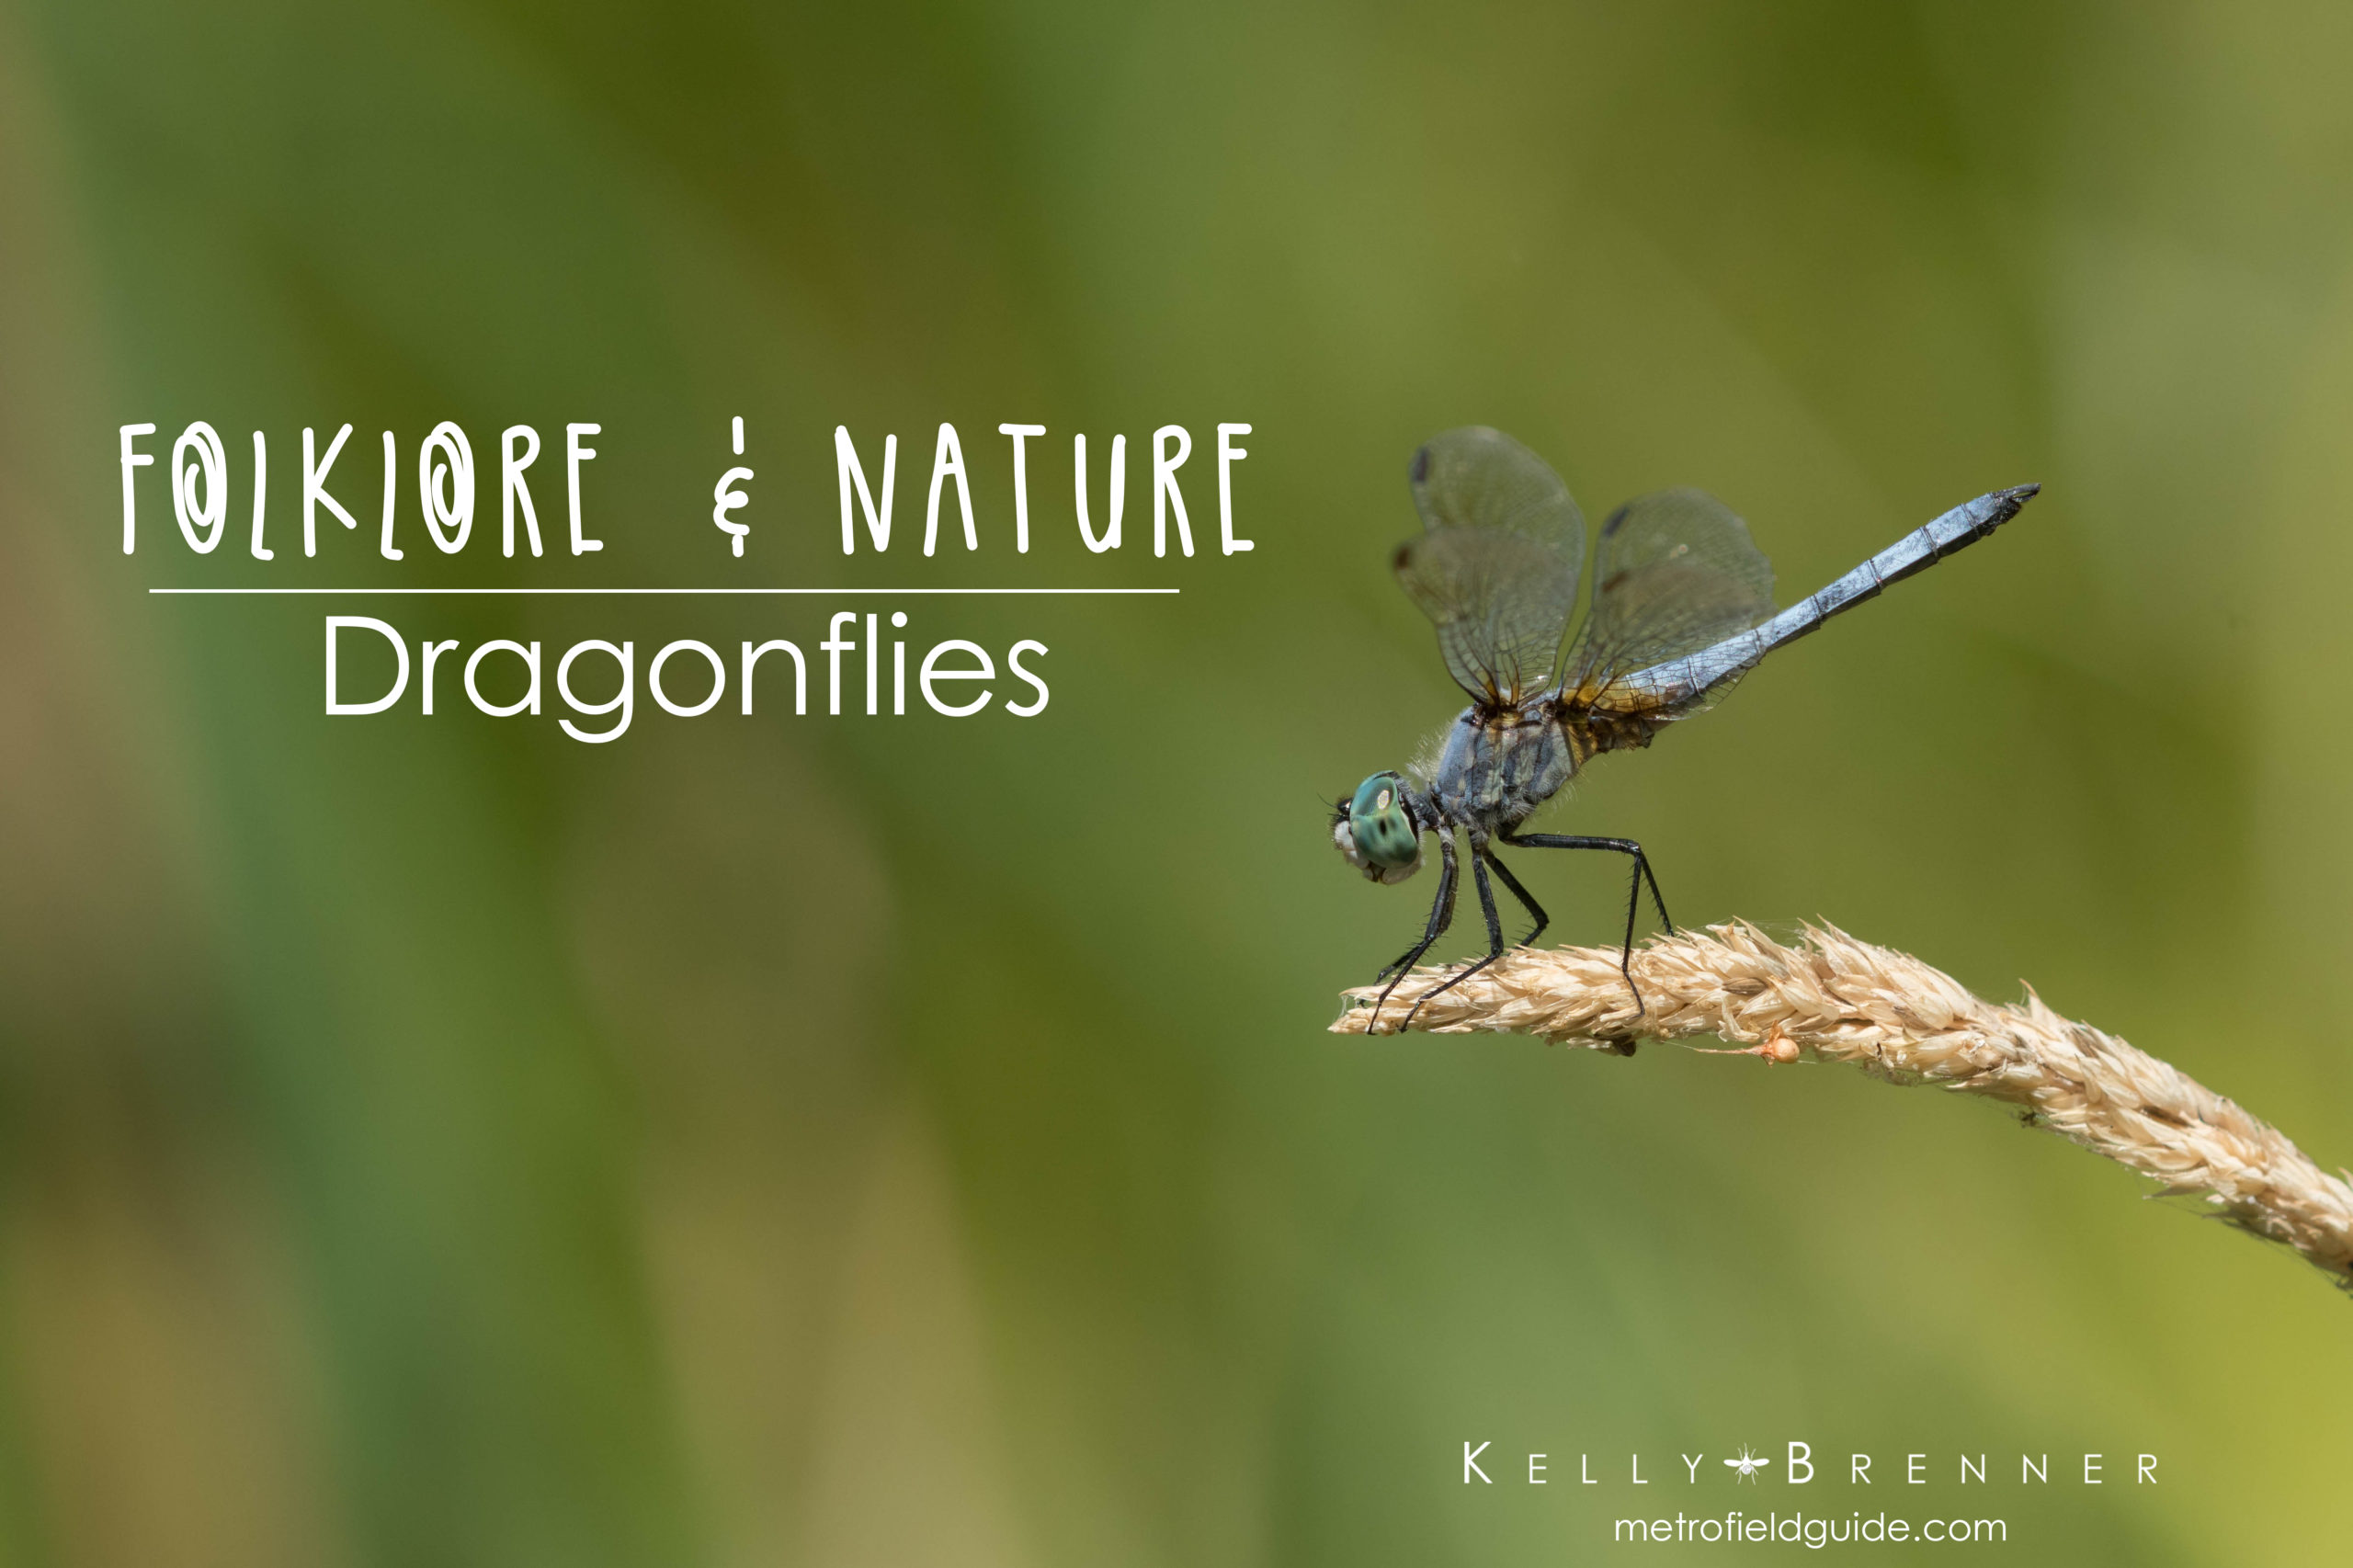 Folklore & Nature: Dragonflies